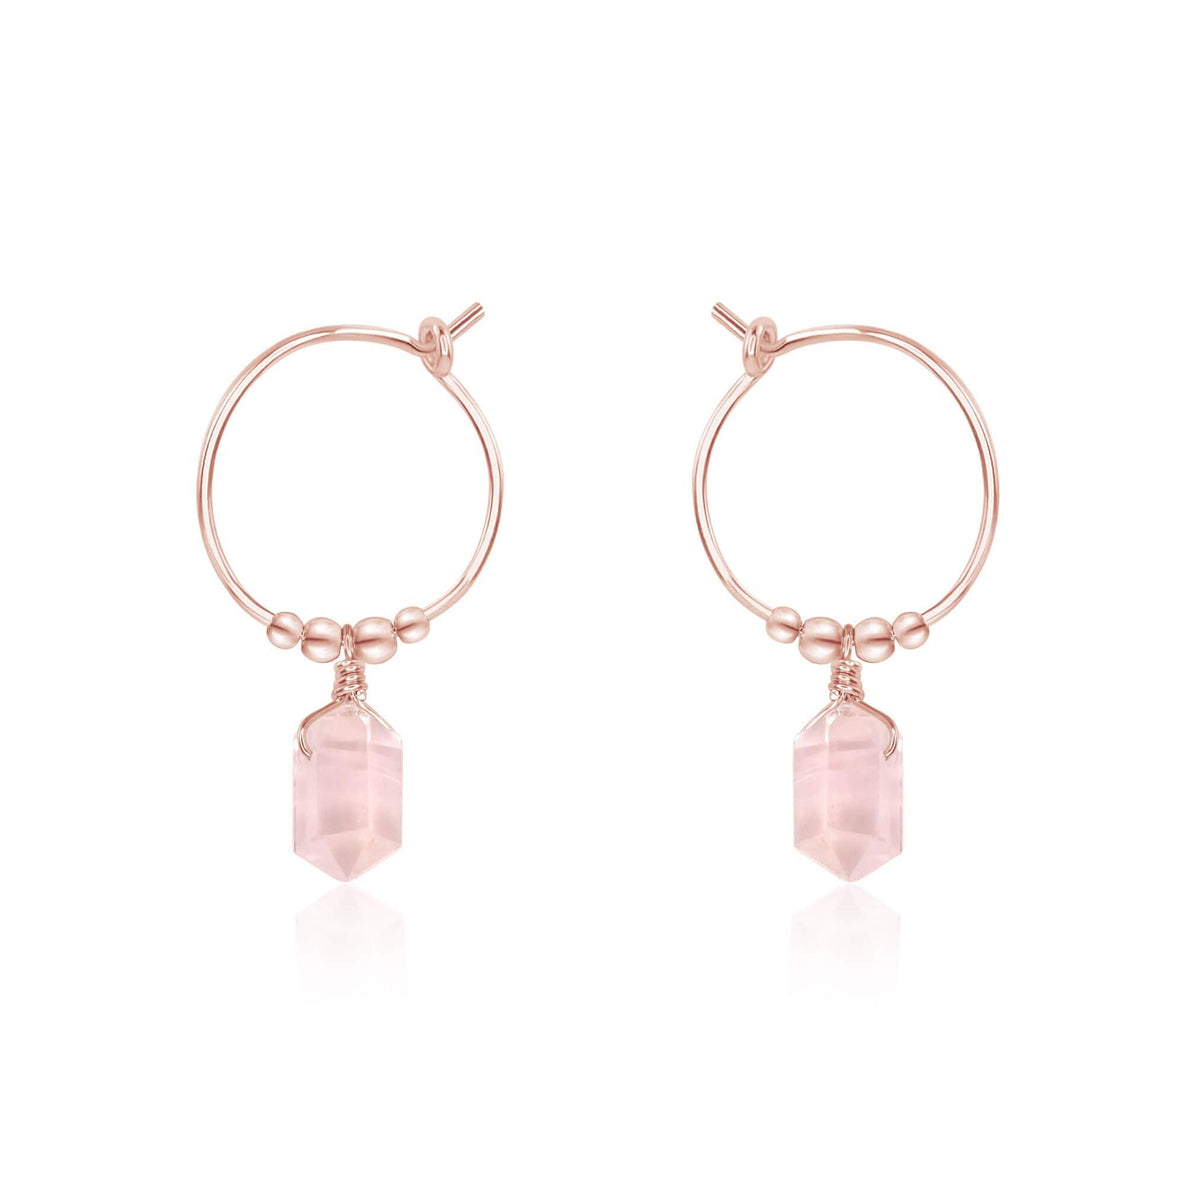 Tiny Double Terminated Crystal Hoop Dangle Earrings - Rose Quartz - 14K Rose Gold Fill - Luna Tide Handmade Jewellery